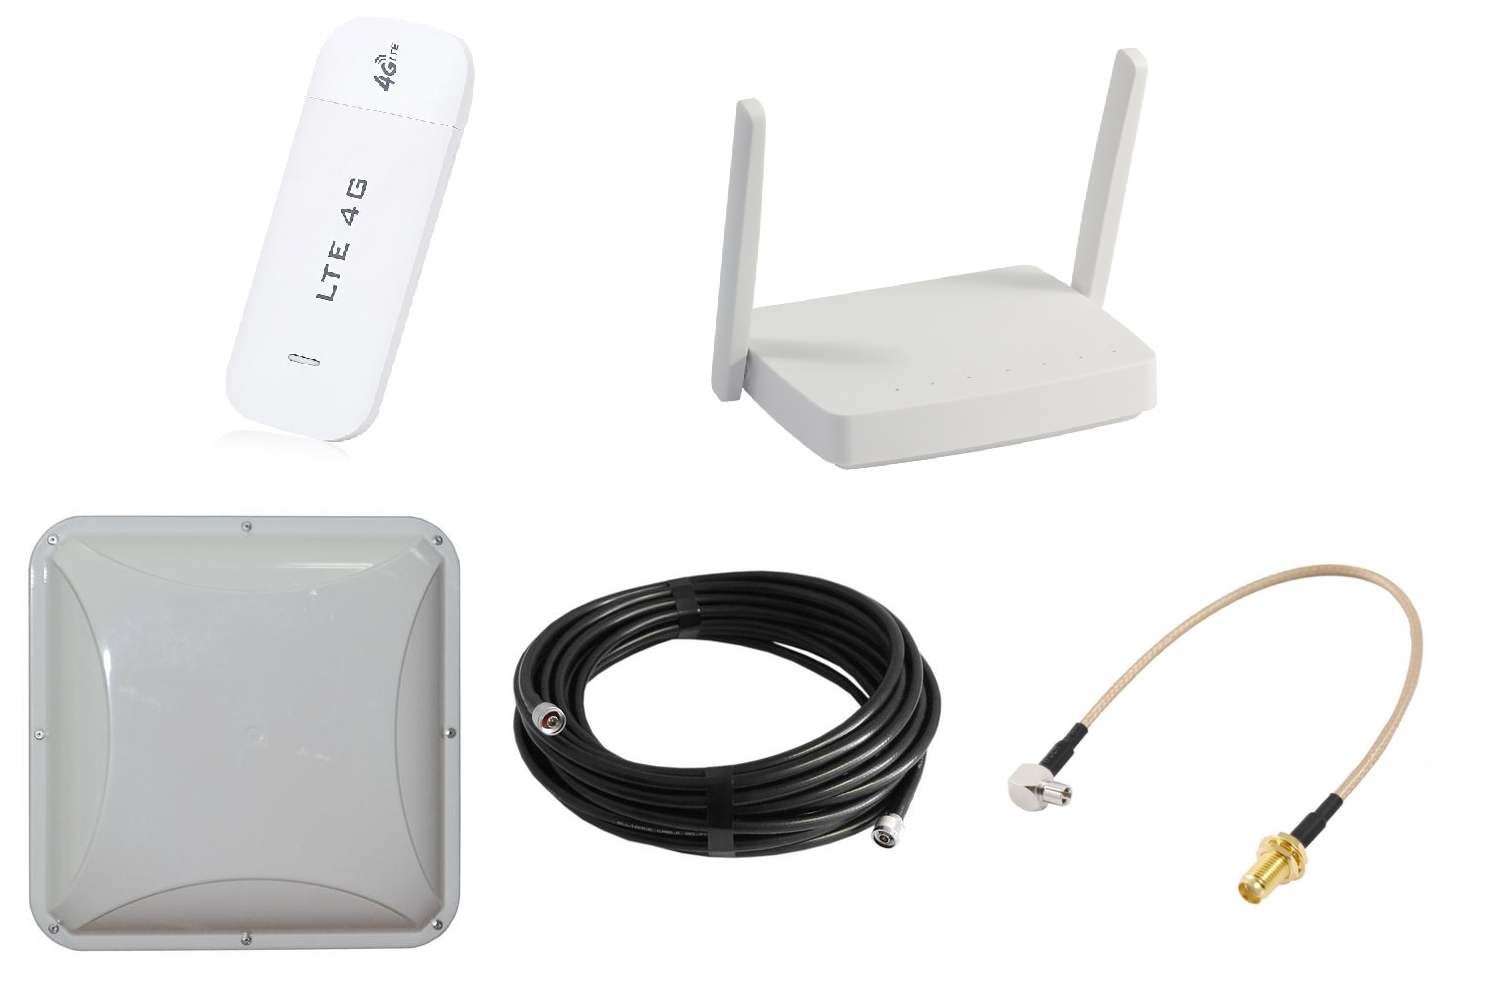 Wi fi device. Антенна комнатная VEGATEL Ant-700/2700-Pi (Тип а). GSM модем 3g/4g/LTE. 4g USB-модем, Wi-Fi-роутер. USB 4g модем с внешней антенной.